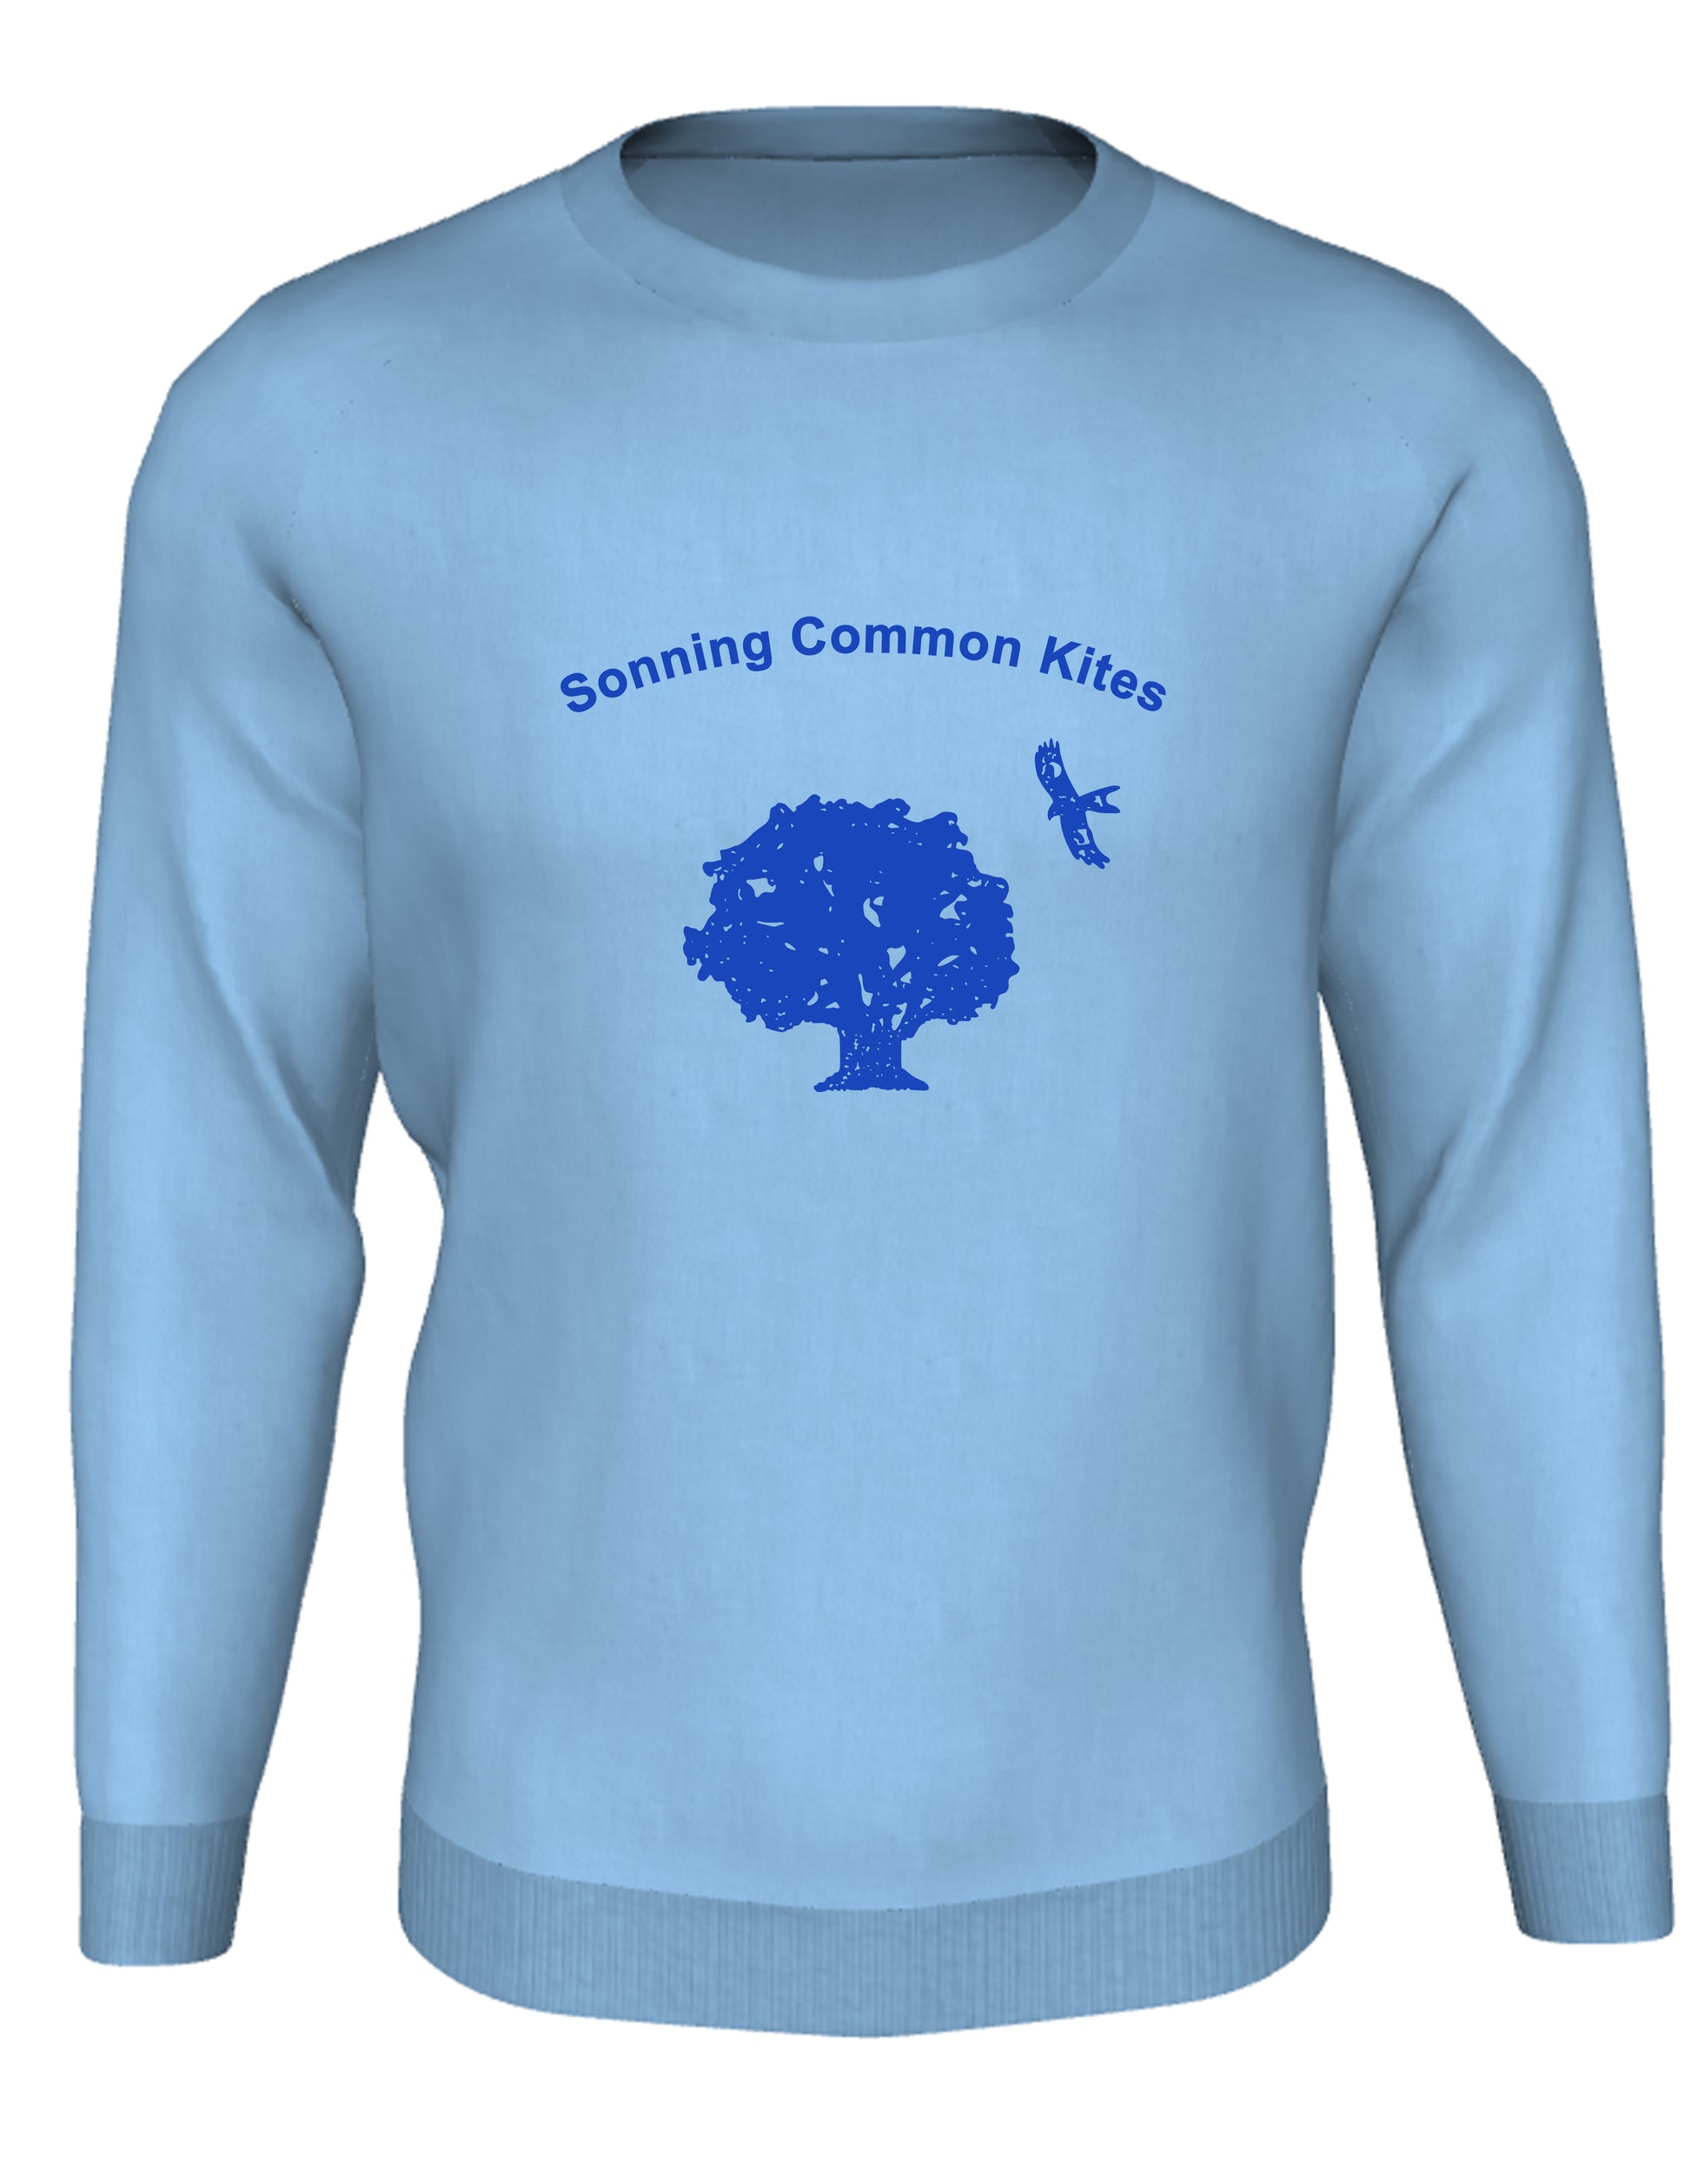 Sonning Common Kites - Crew Neck Sweatshirt - School Uniform Shop